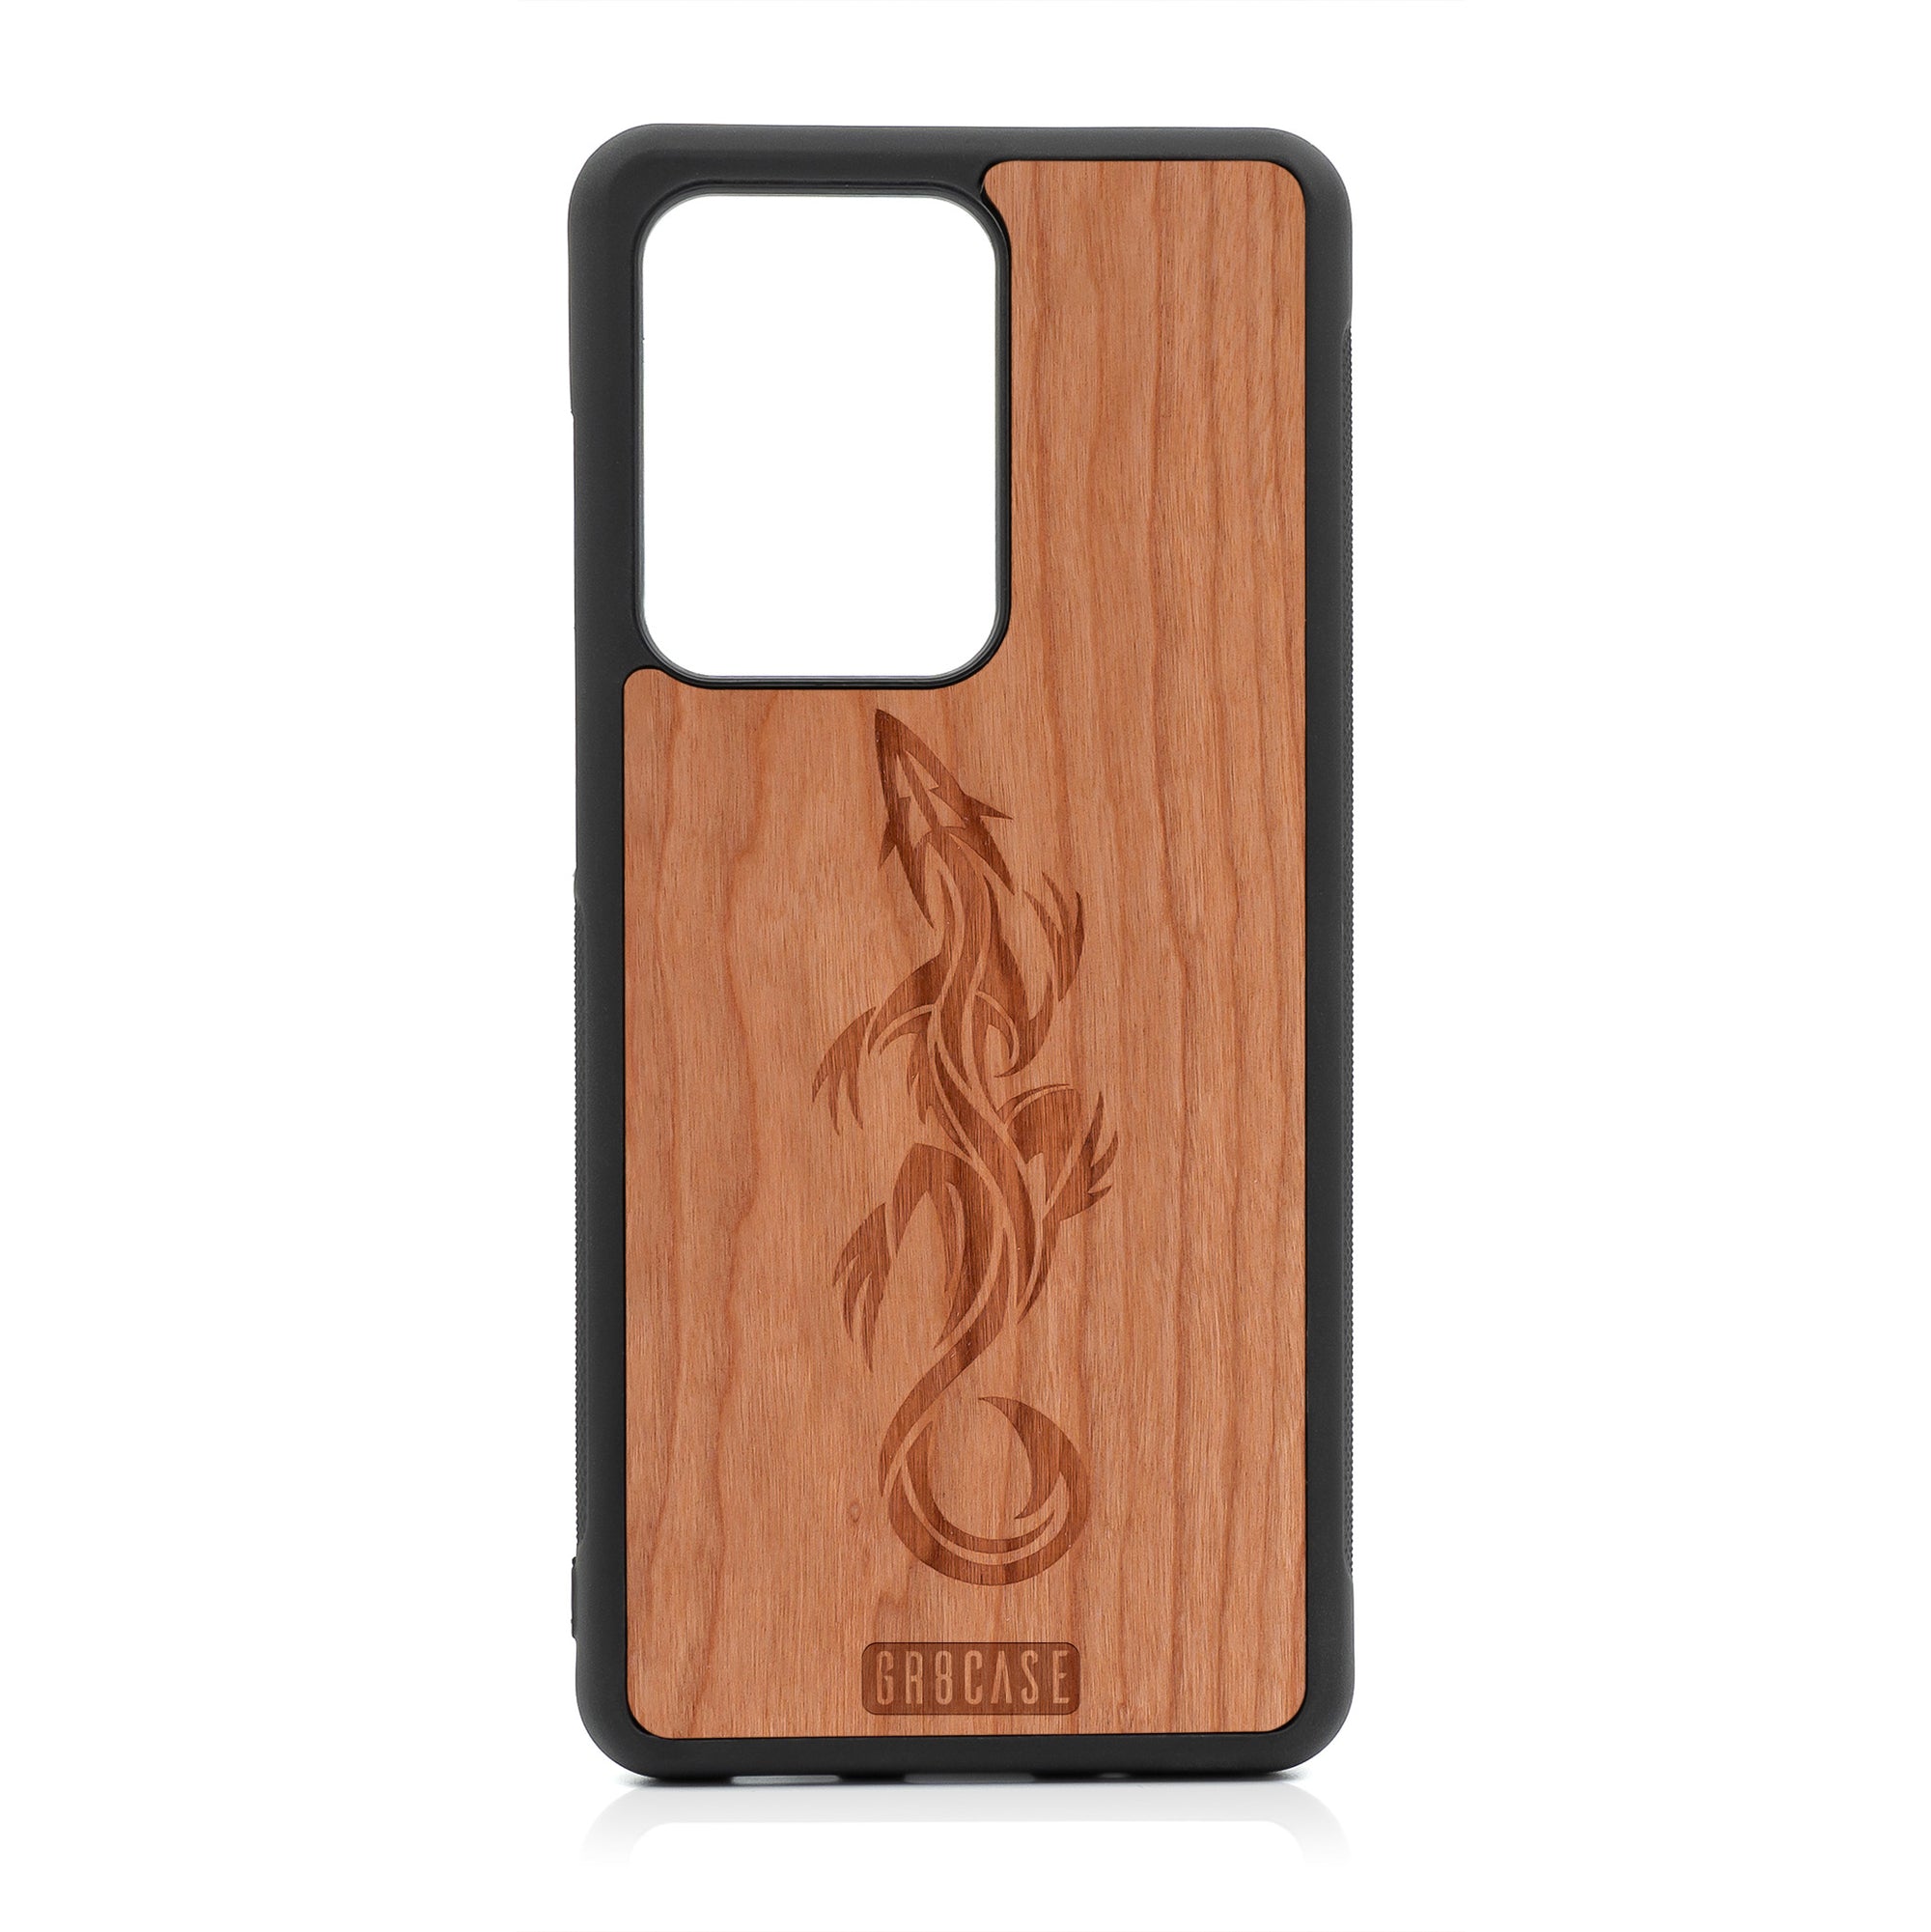 Lizard Design Wood Case For Samsung Galaxy S20 Ultra by GR8CASE